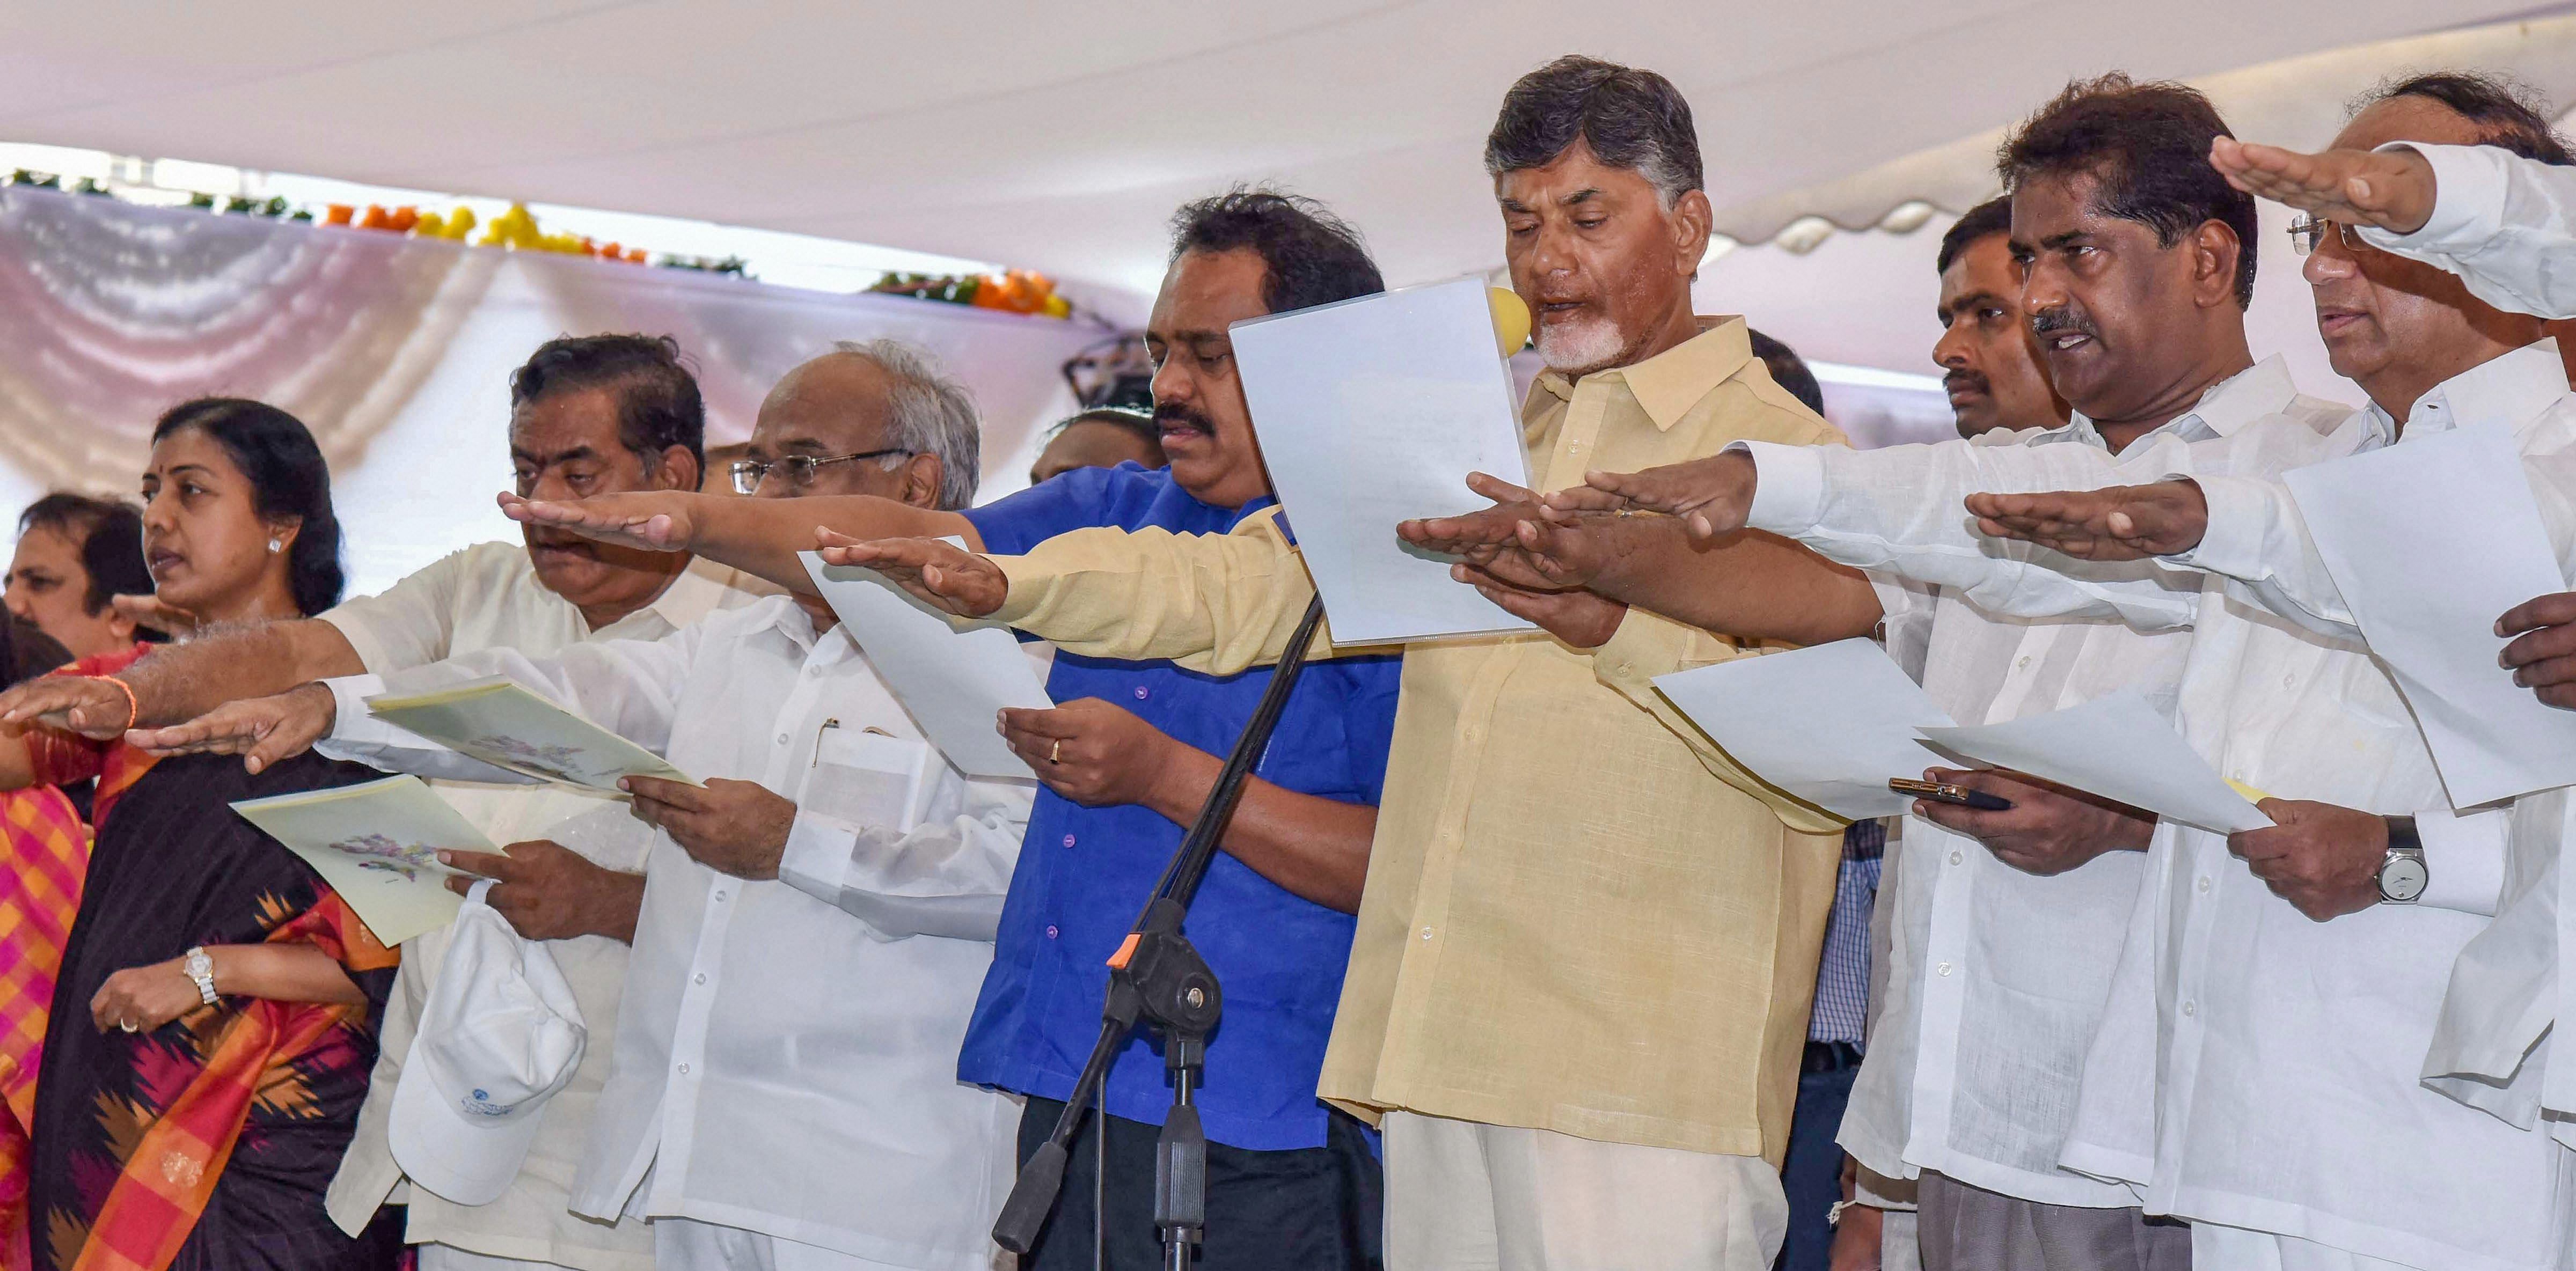 Andhra Pradesh Chief Minister N Chandrababu Naidu administers oath to the people during a ‘Nava Nirmana Deeksha’ programme, in Vijayawada on Saturday. PTI